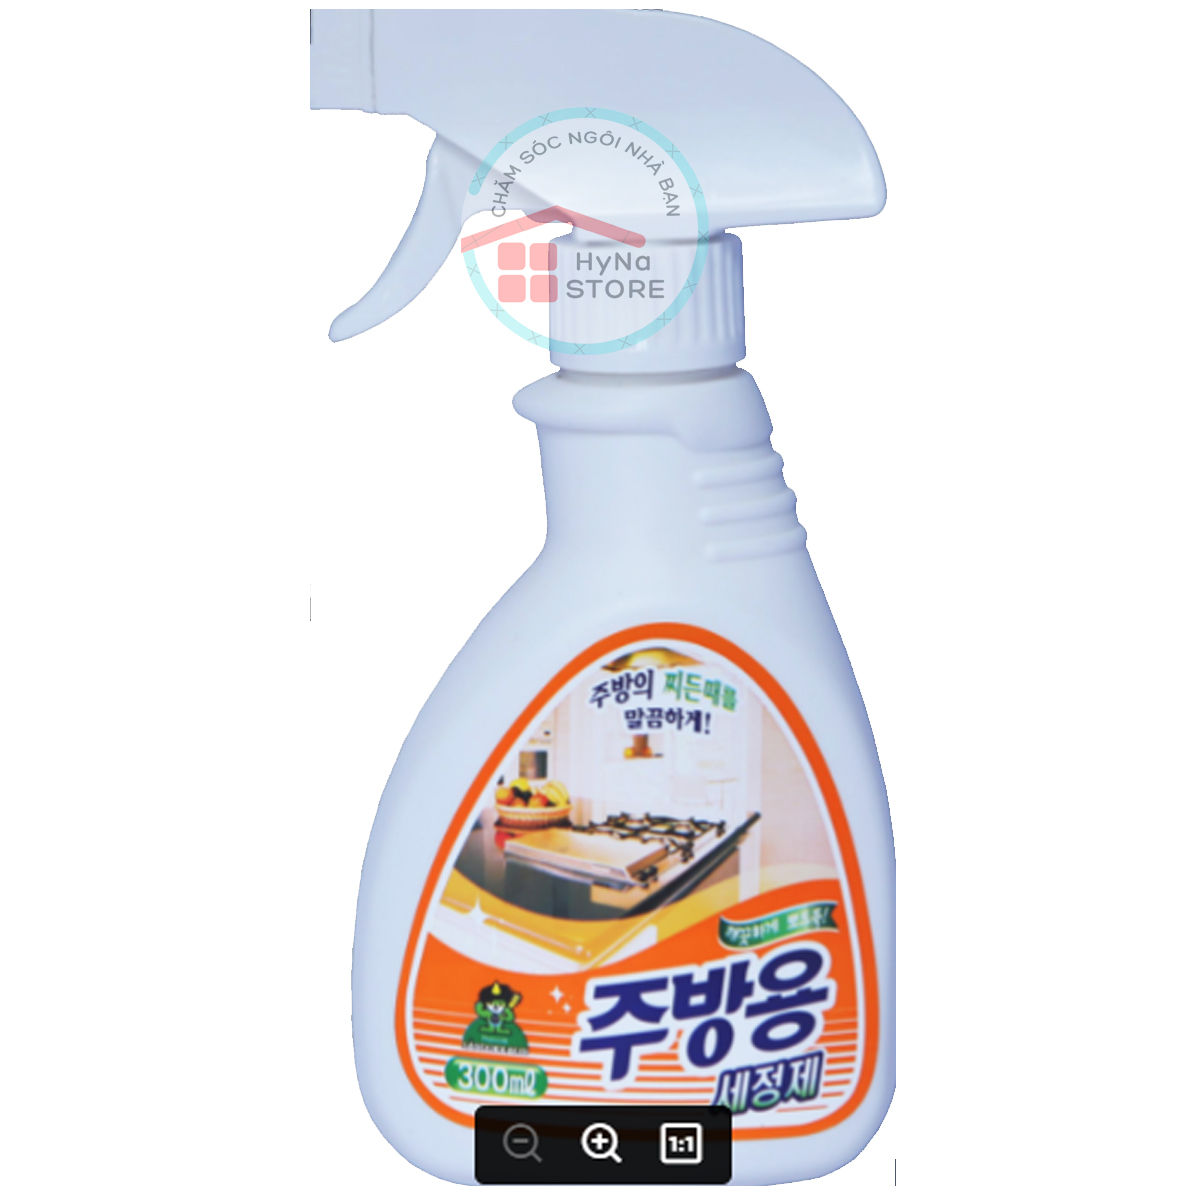 Chai xịt tẩy vệ sinh khử khuẩn Sandokkaebi Korea 300ml